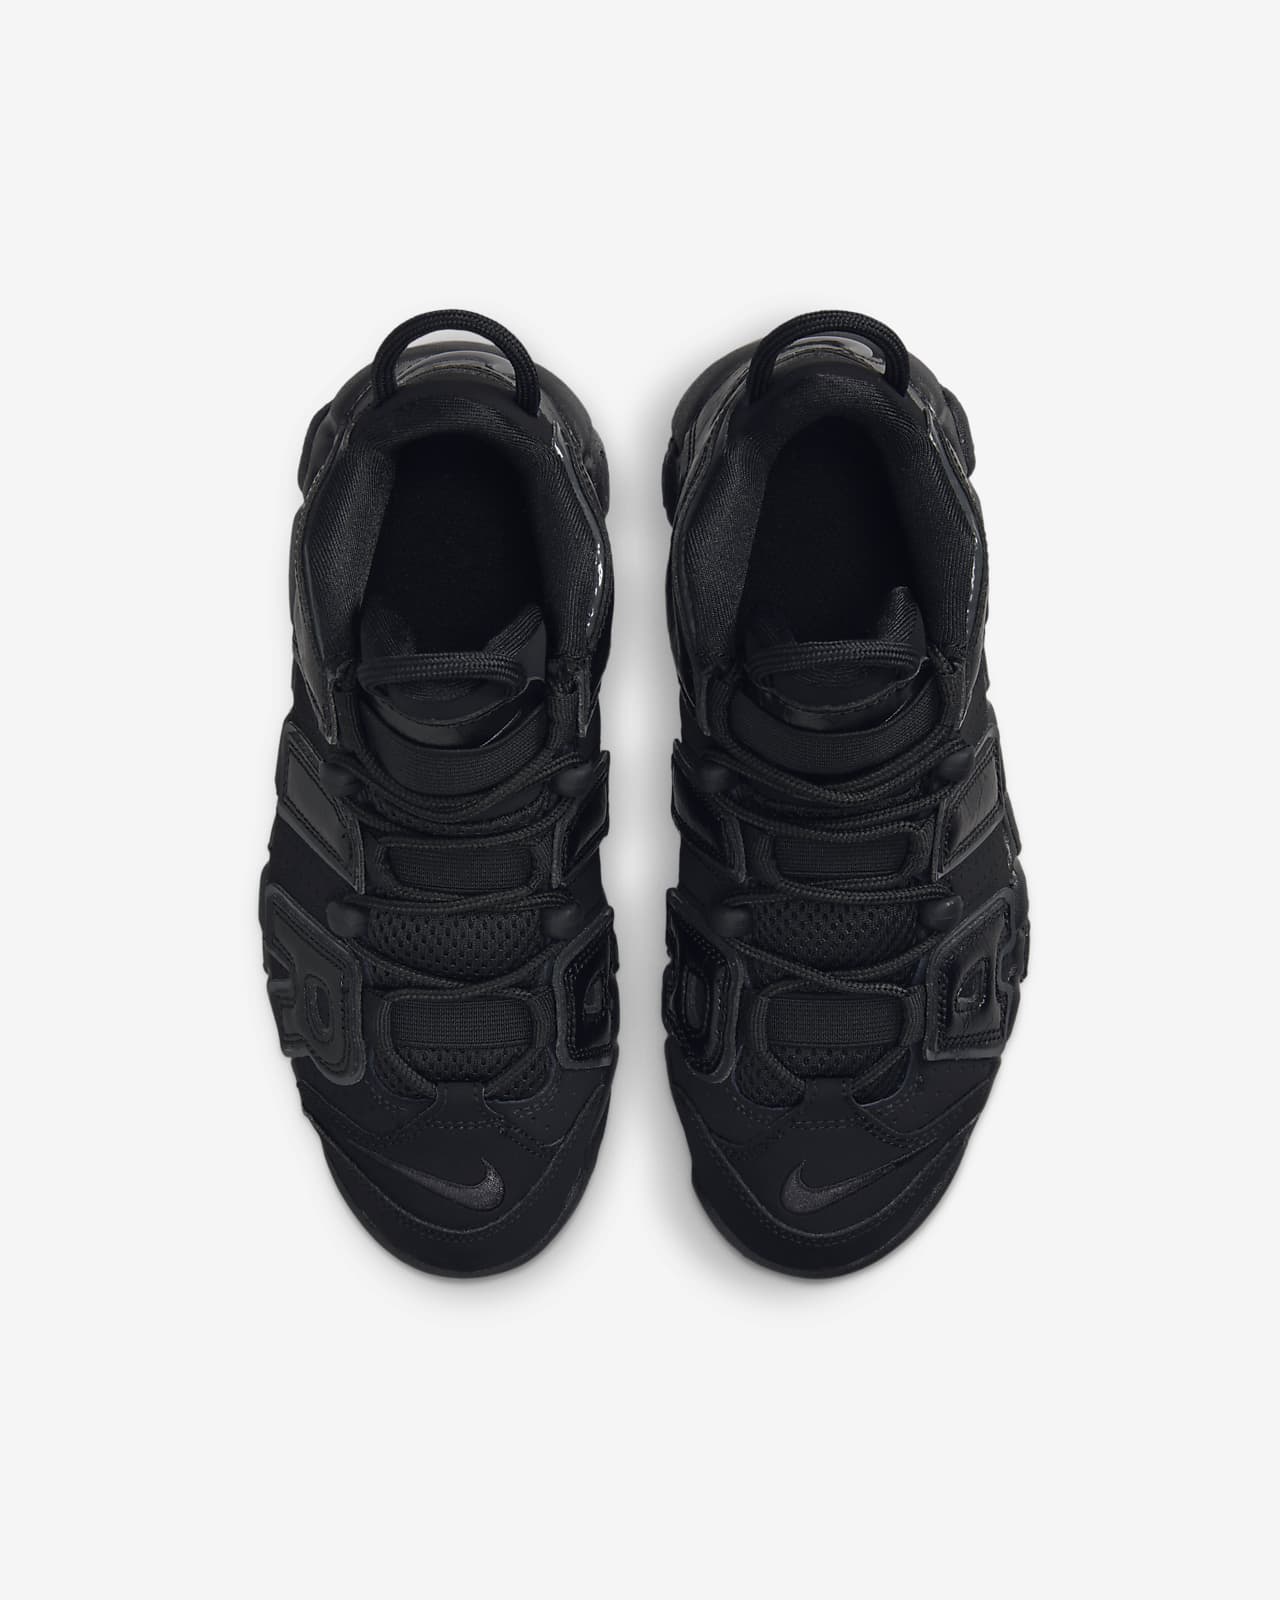 Nike Air More Uptempo Black White On Feet 